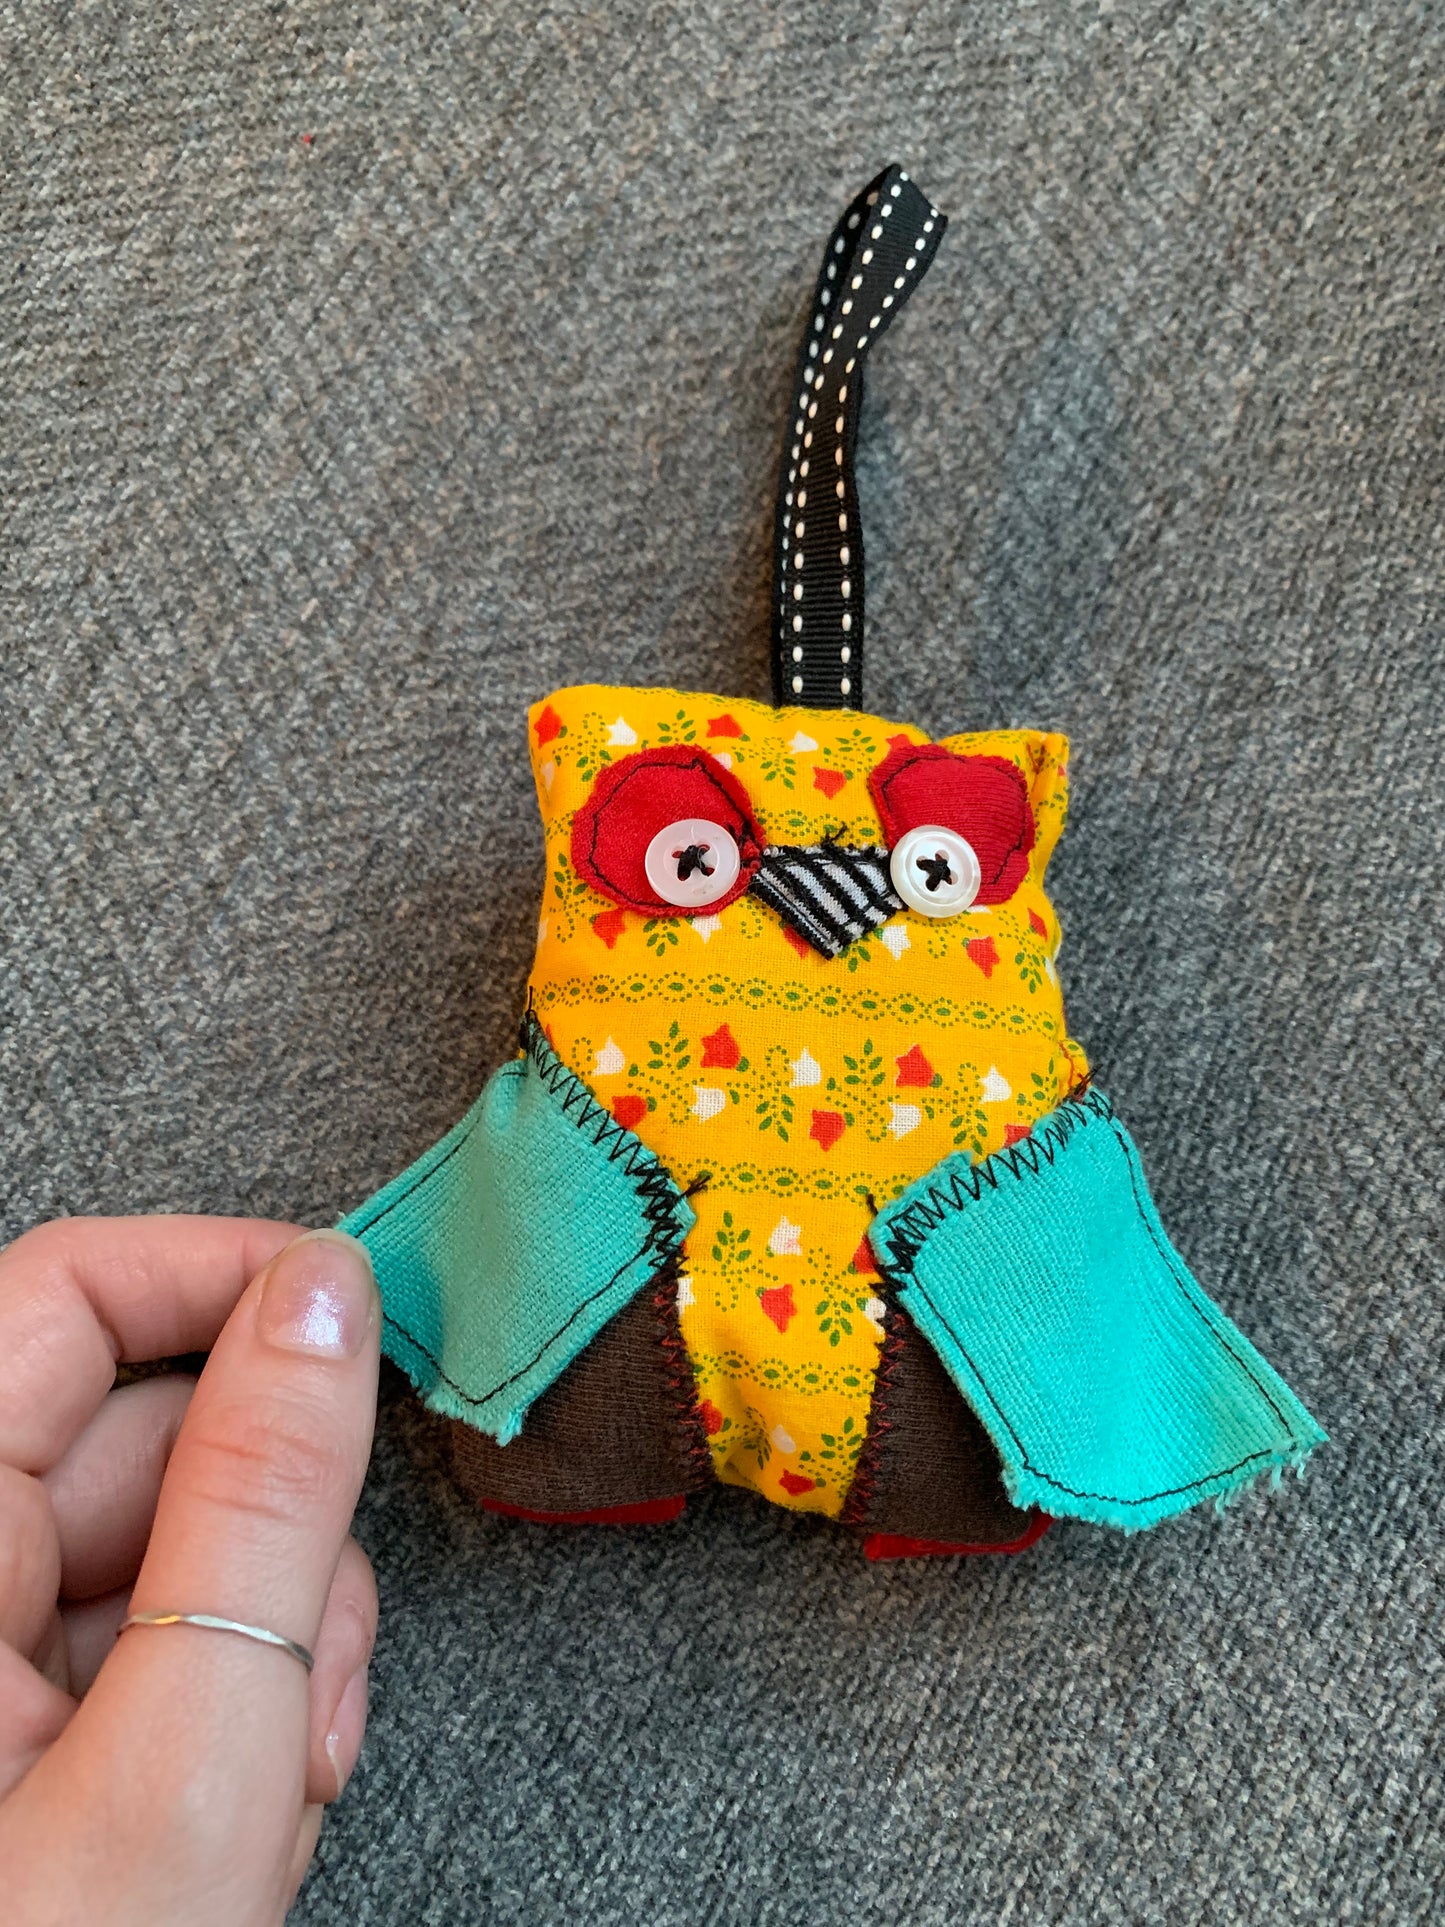 Mini Animal Friend - Owl - Keychain, Ornament, Backpack Charm